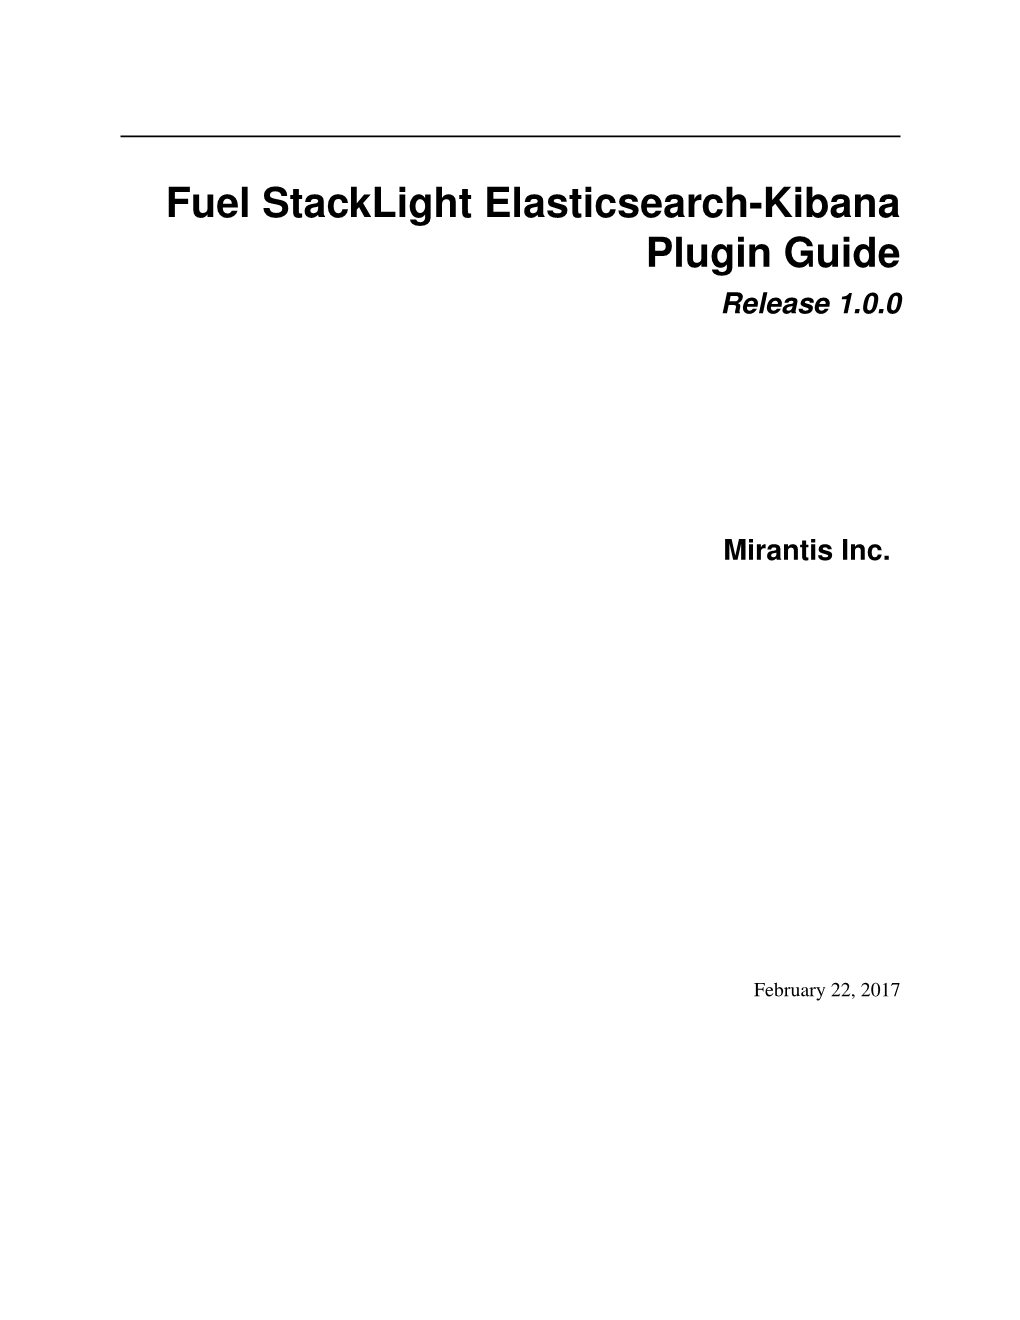 Fuel Stacklight Elasticsearch-Kibana Plugin Guide Release 1.0.0